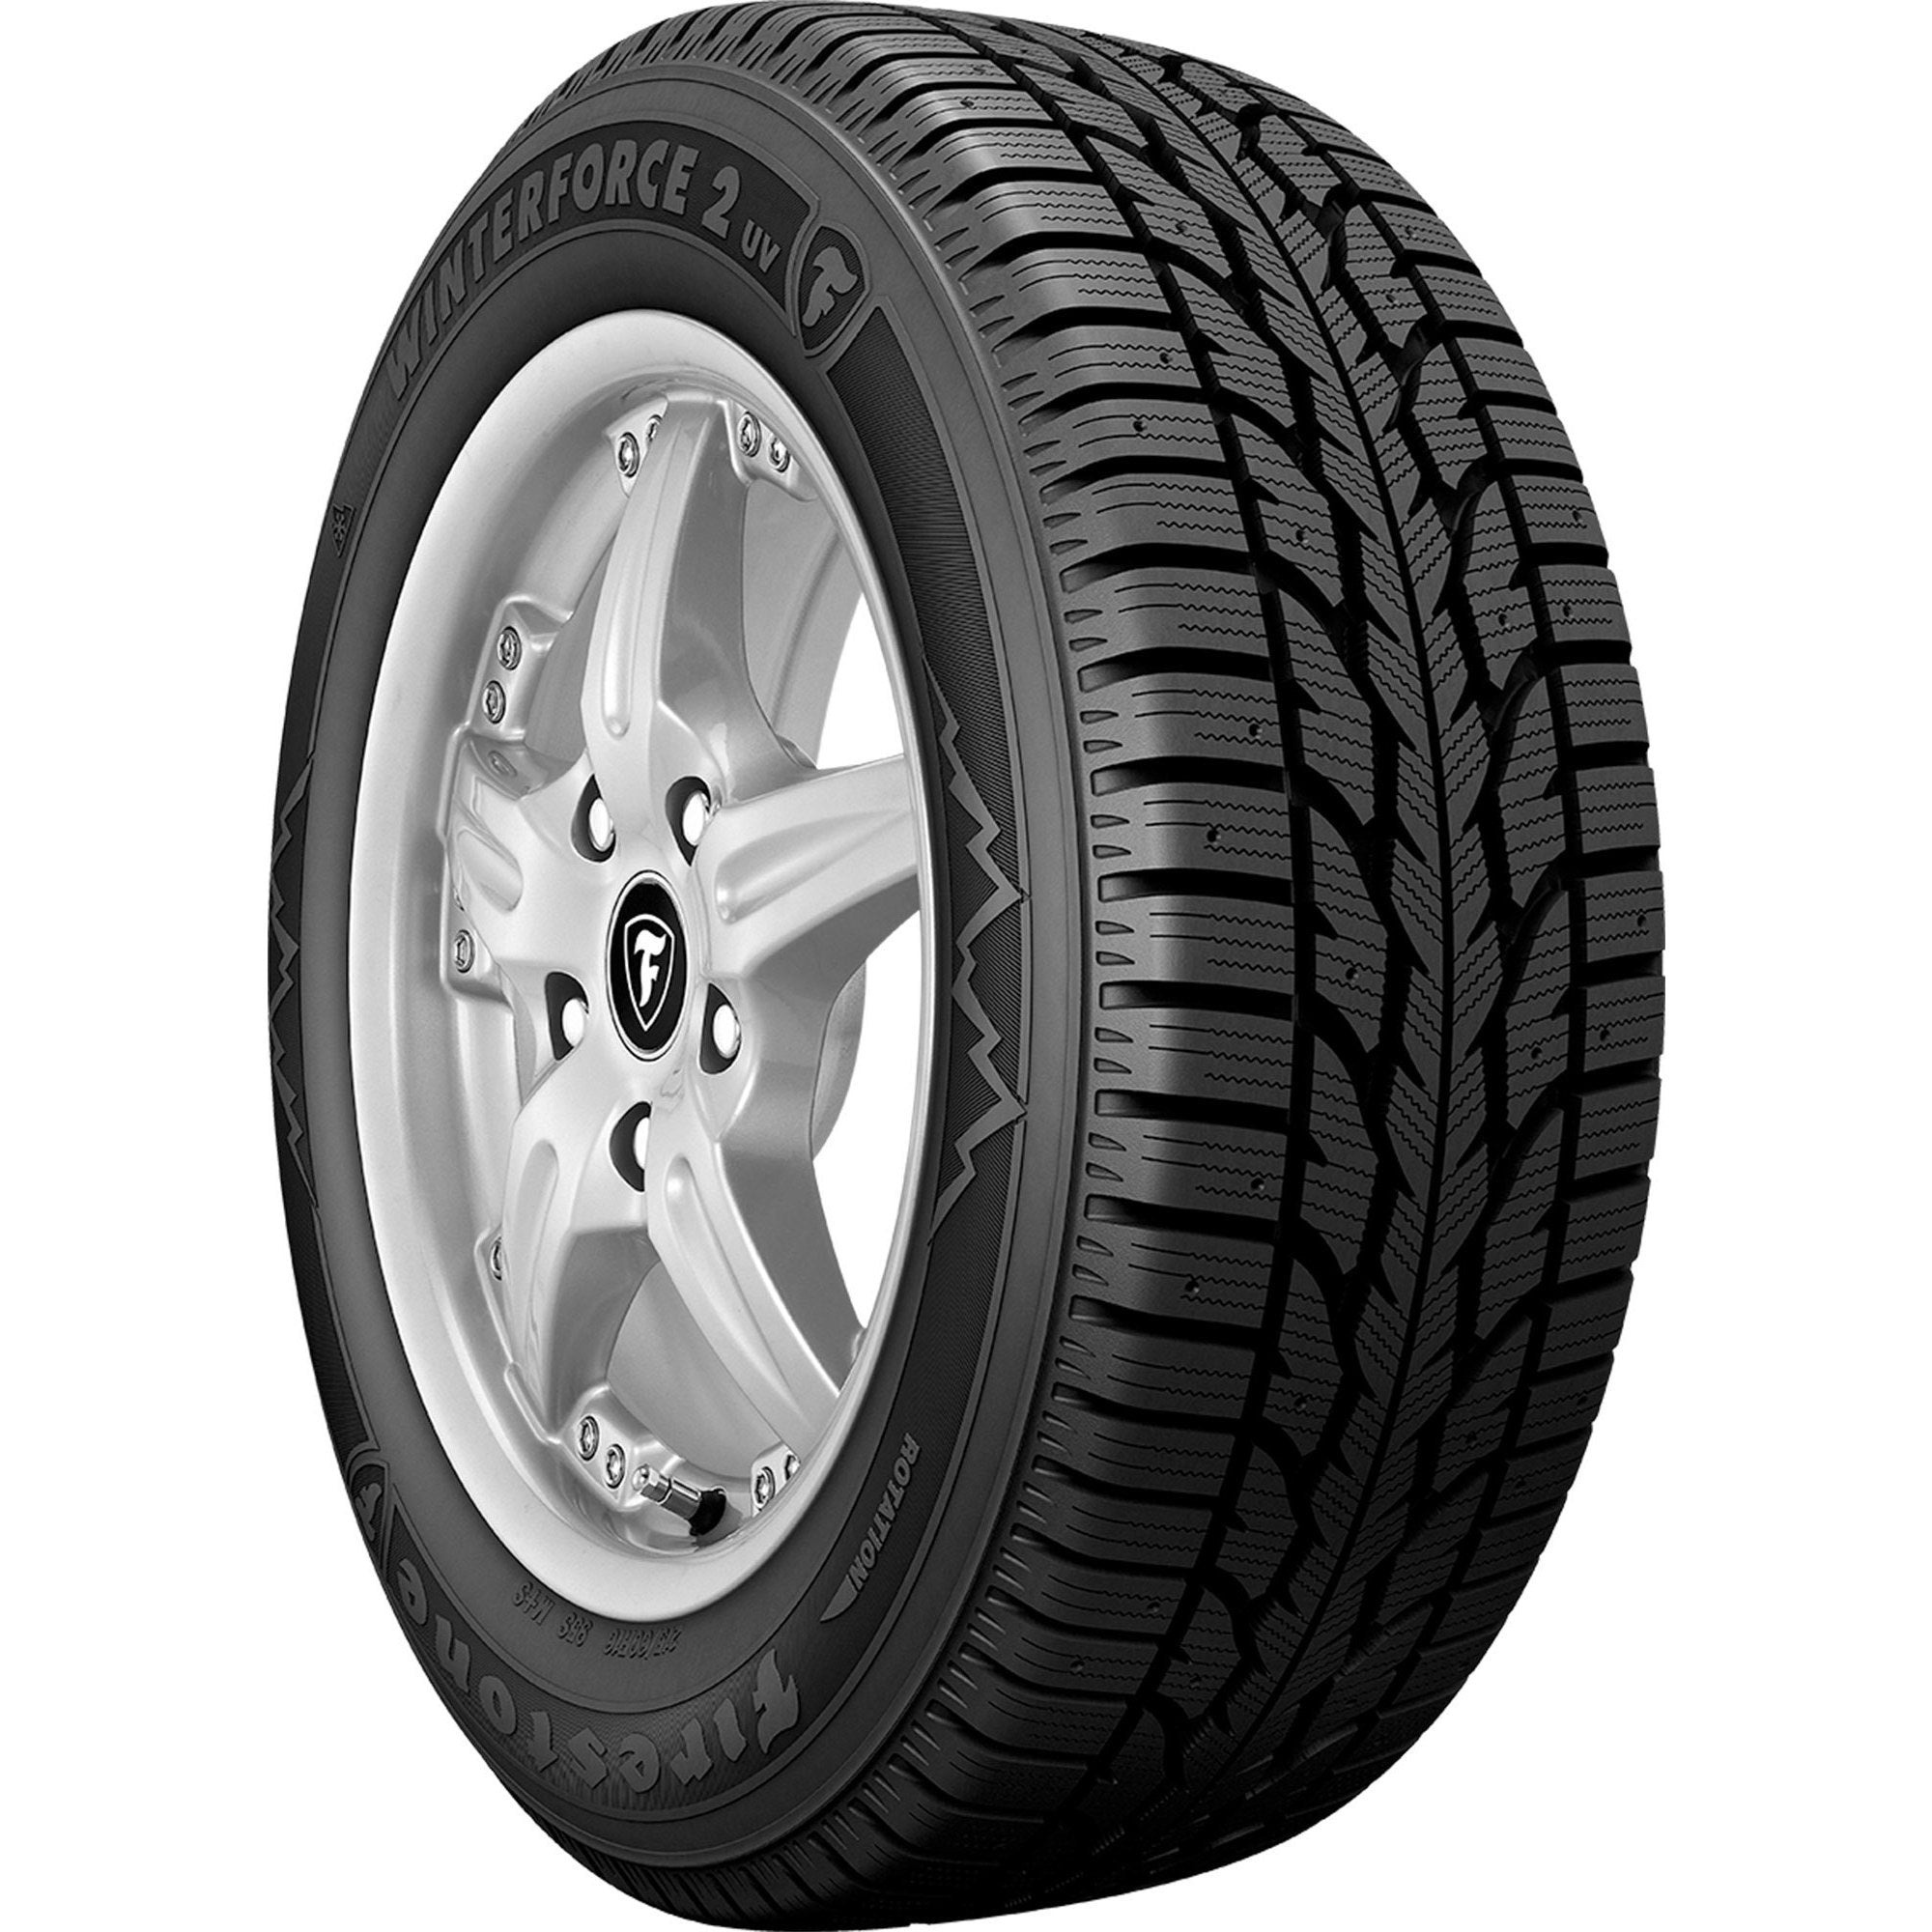 FIRESTONE WINTERFORCE2 UV 215/65R16 (27X8.5R 16) Tires